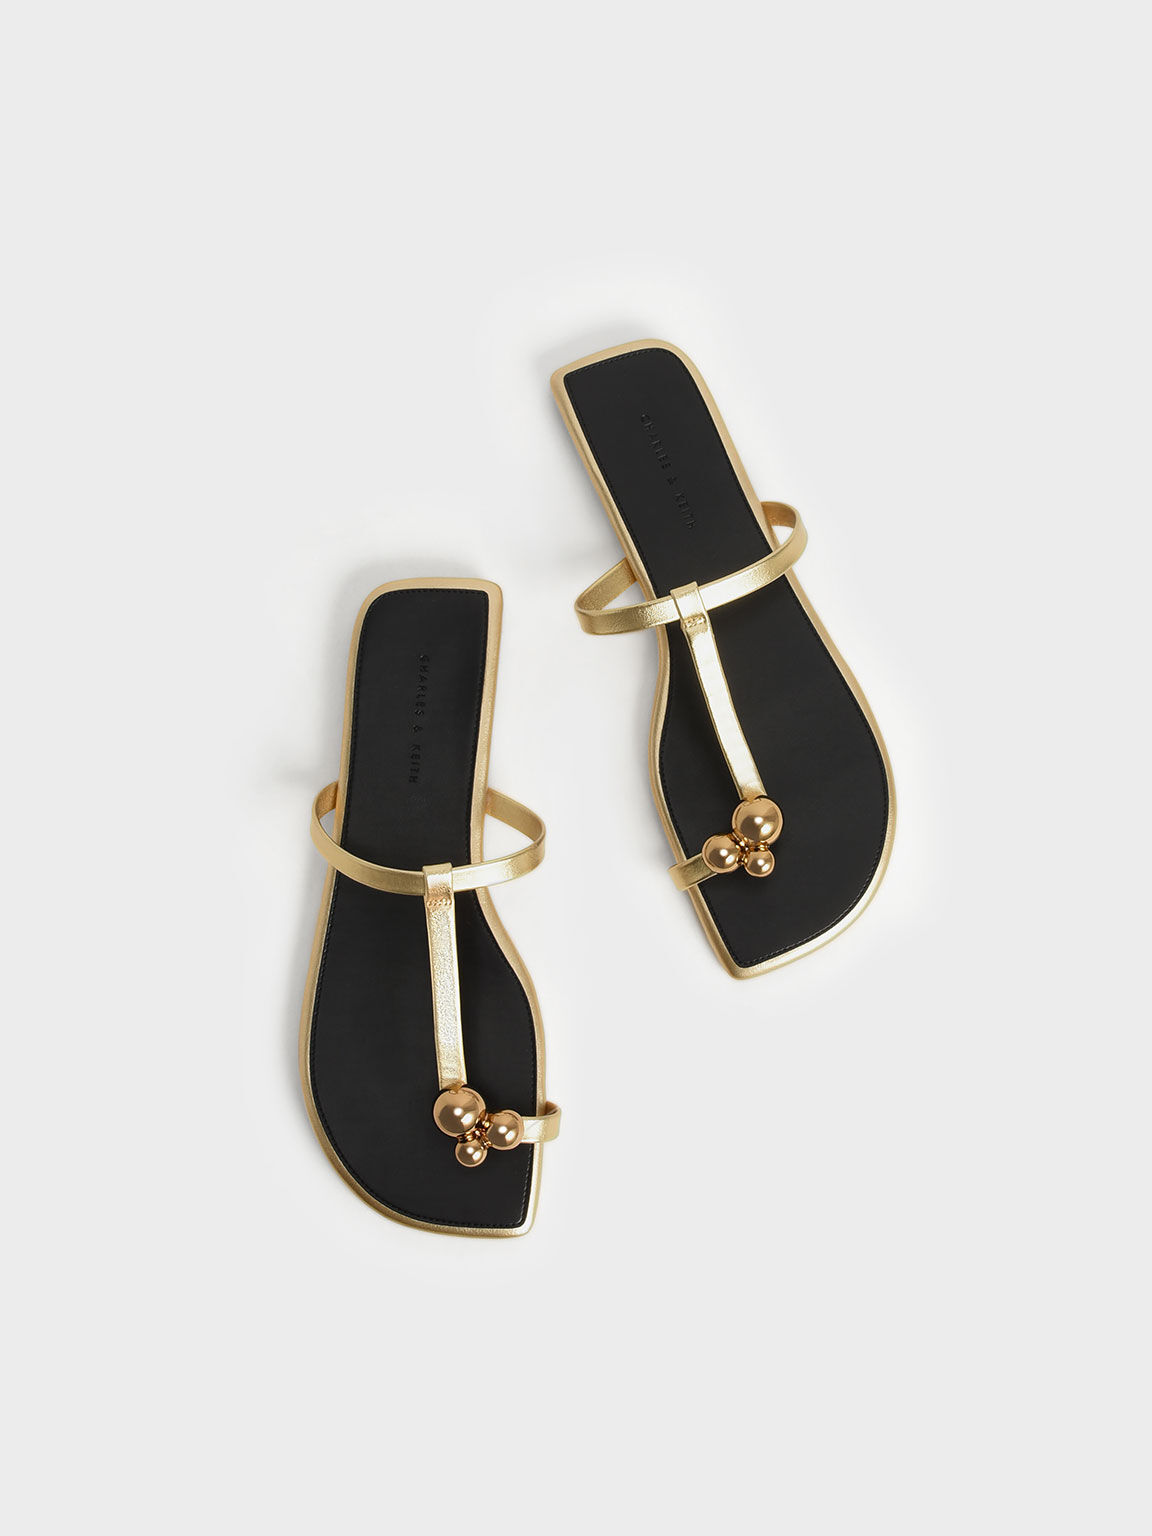 Embellished Toe-Ring Metallic Flat Sandals, Gold, hi-res